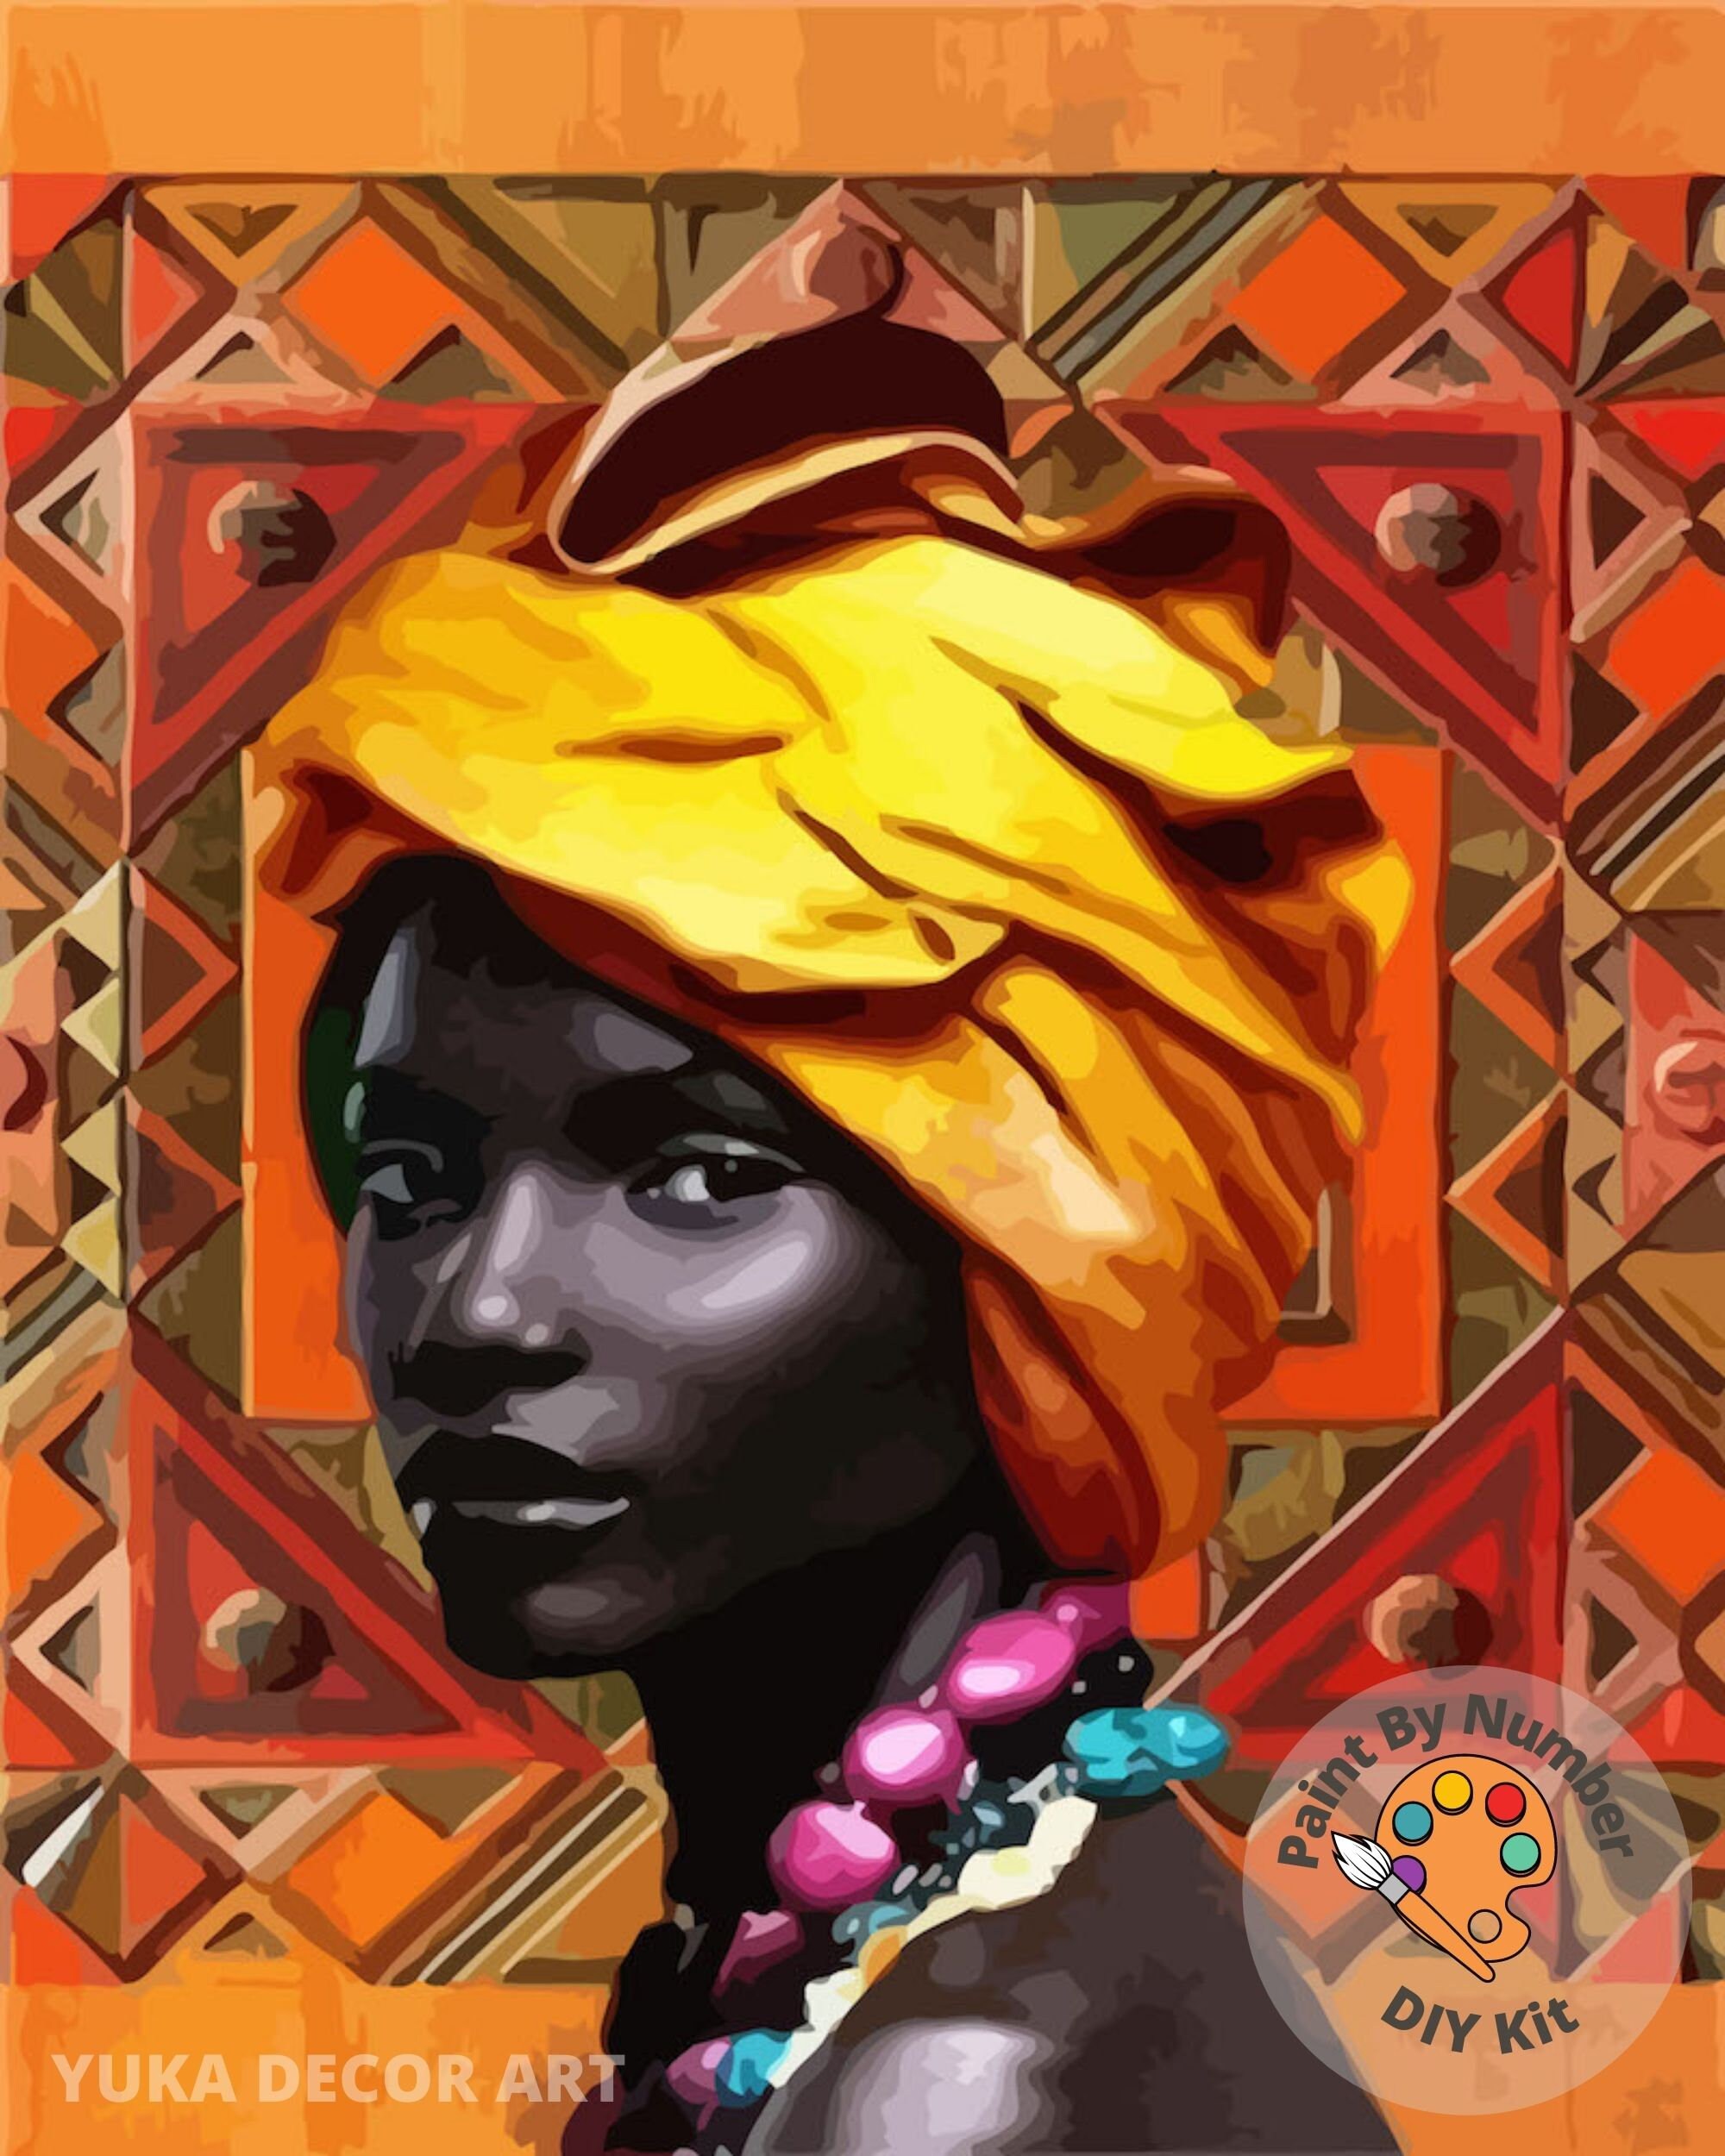 Peinture Par Numéro Peinture Par NuméRo Adulte Fille Africaine Art Graffiti  Abstrait 40x50cm Bricolage Tableau Peindre Pa562